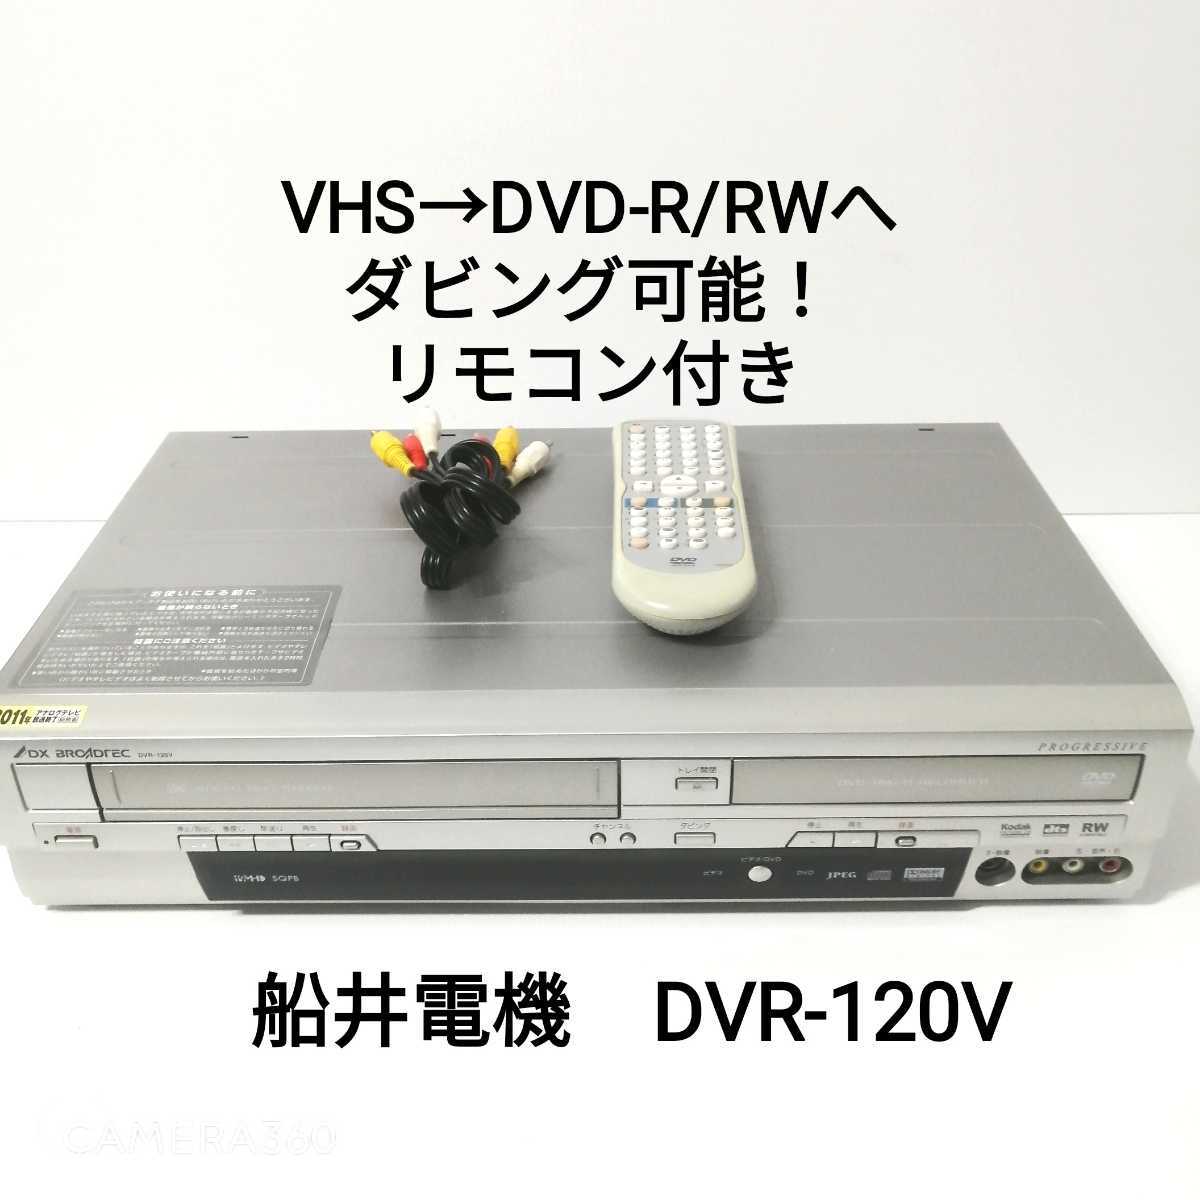 DXアンテナ Hi-Fiビデオ一体型DVD-RW/Rレコーダー DVR-120V-